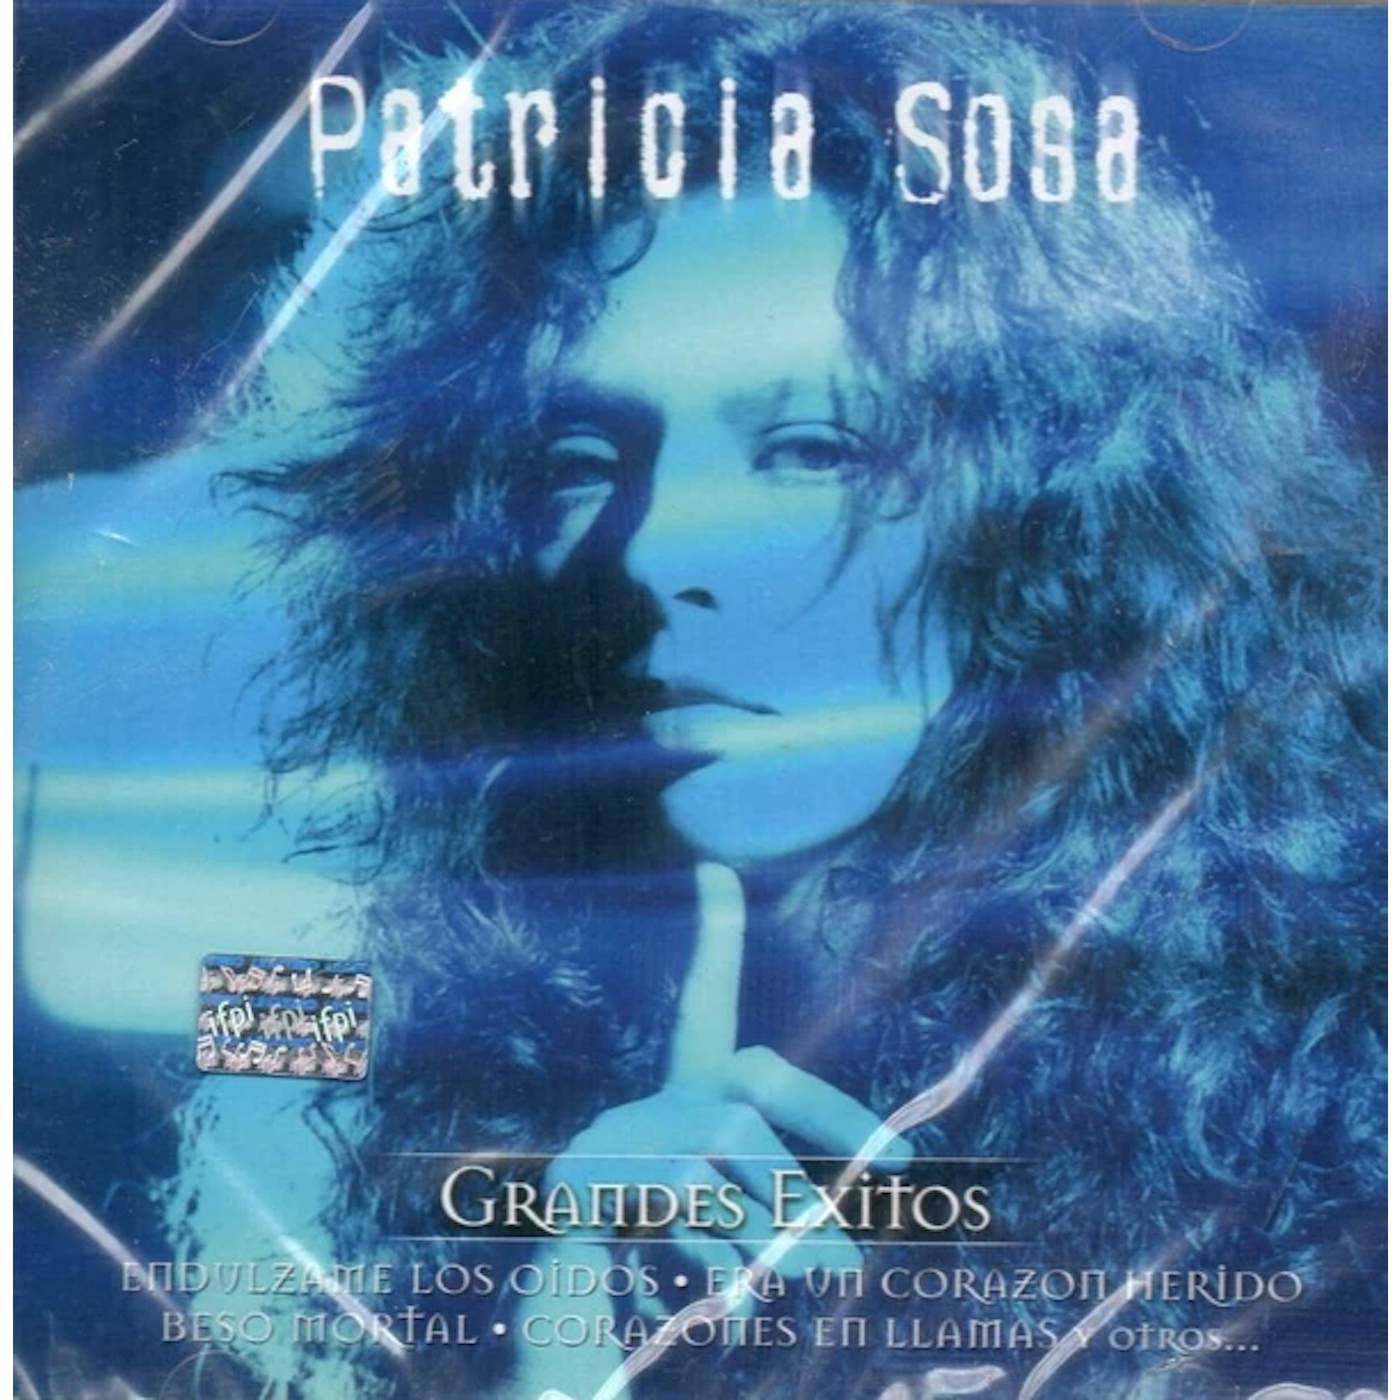 Patricia Sosa SERIE DE ORO: GRANDES EXITOS CD